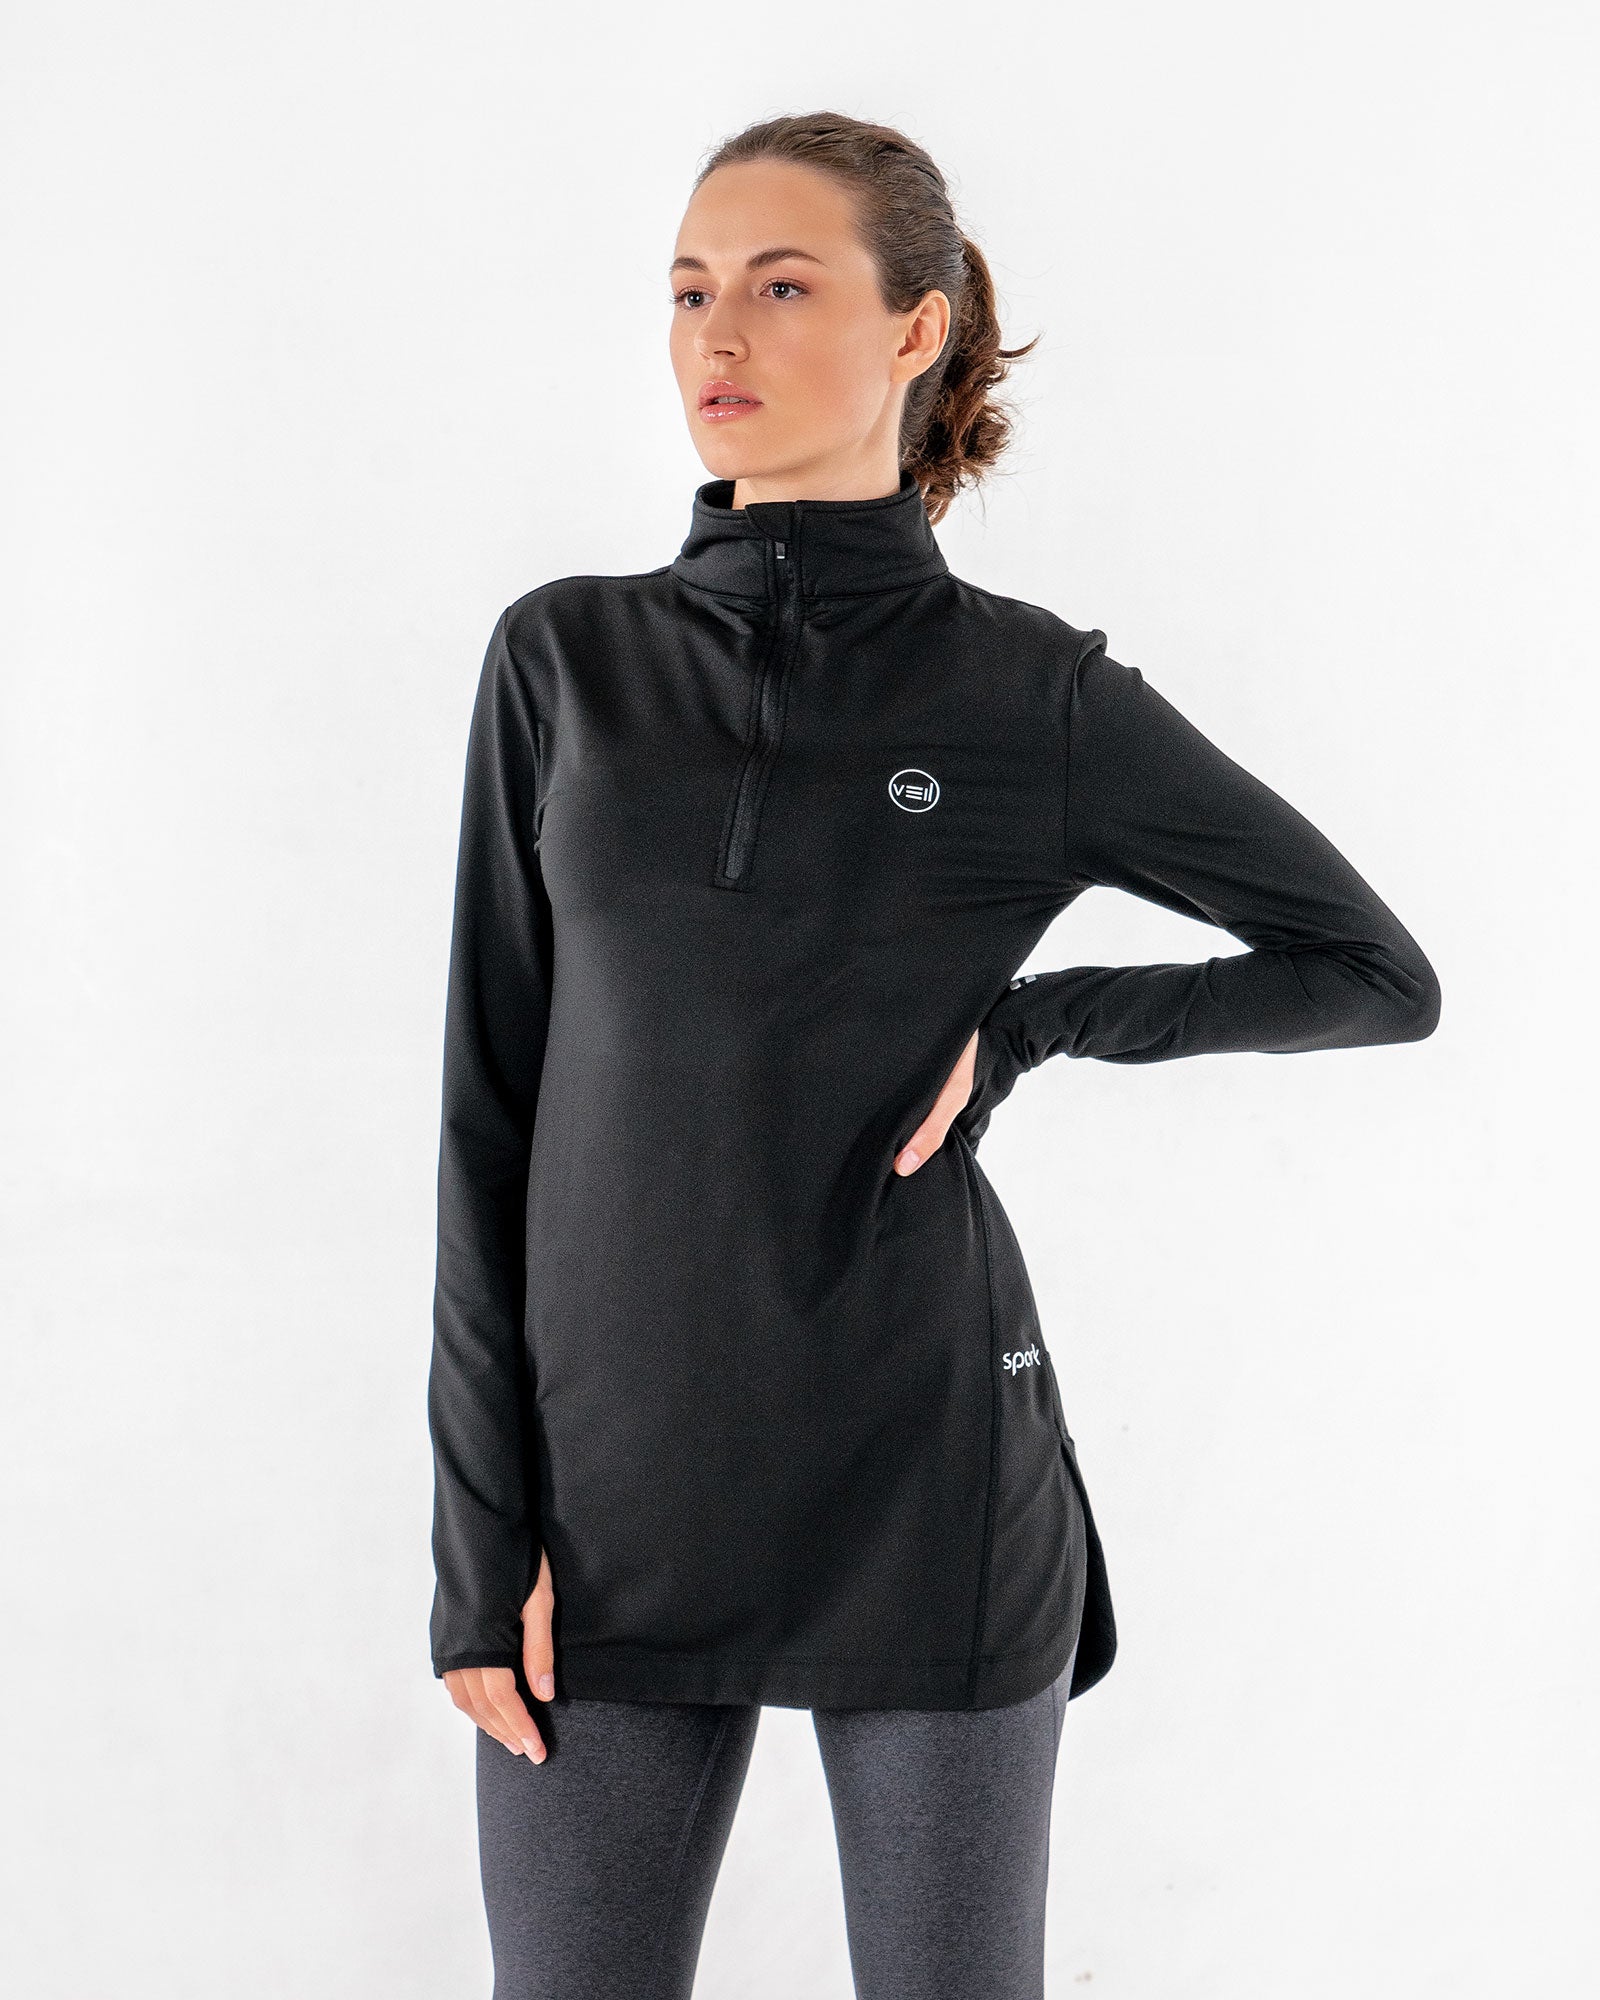 Spark Half-Zip in black by Veil Garments. Modest activewear collection.